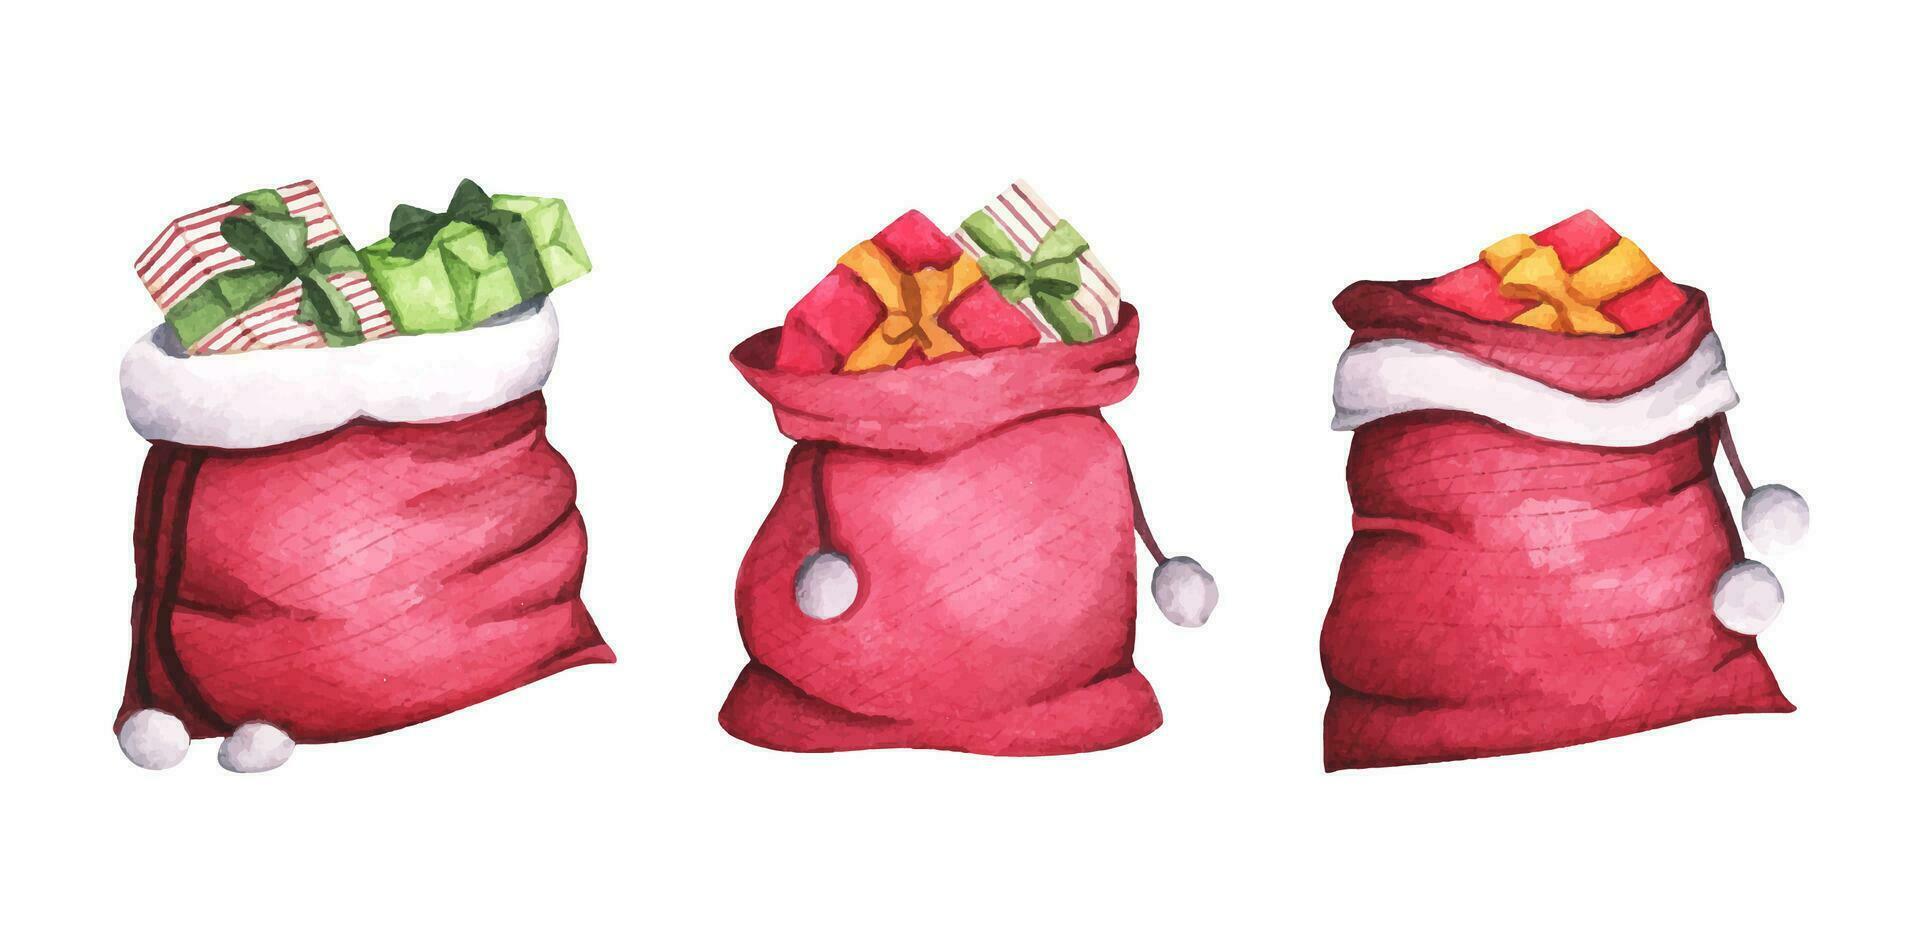 Set Full gift santa claus red bag. Christmas decorative element. Watercolor illustration. vector